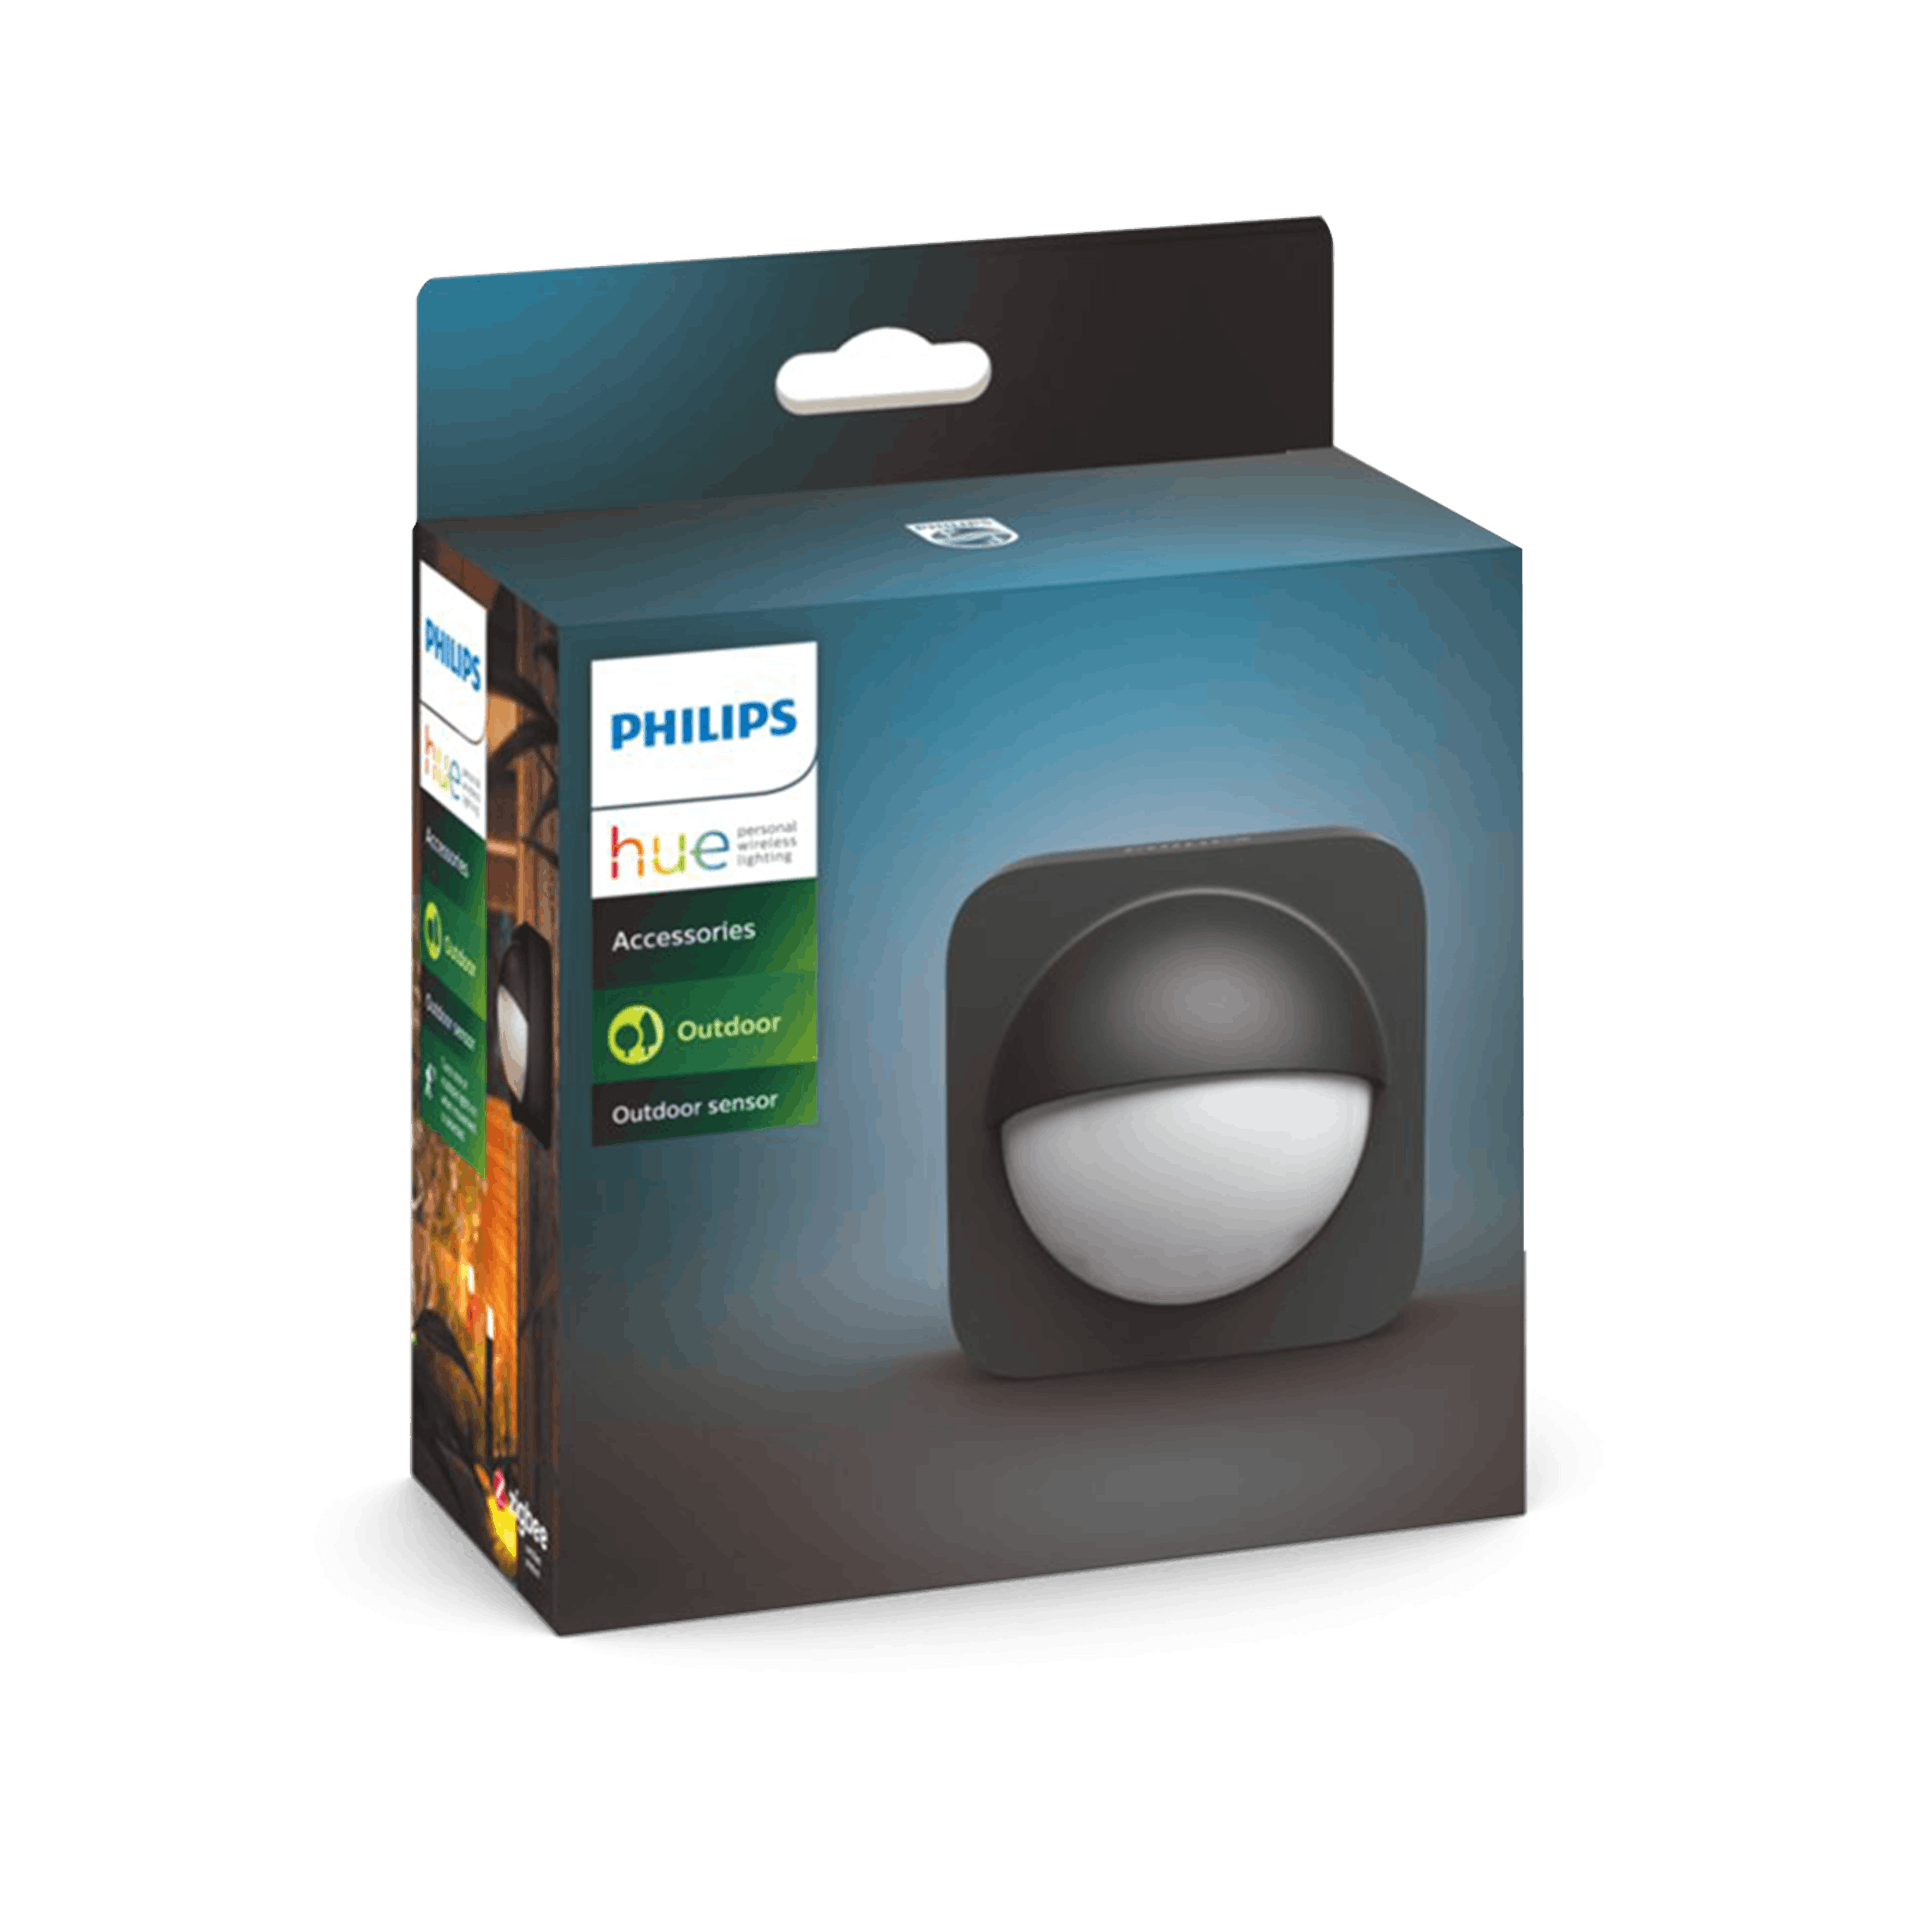 Philips Hue Outdoor Sensor (G2) - Packaging image